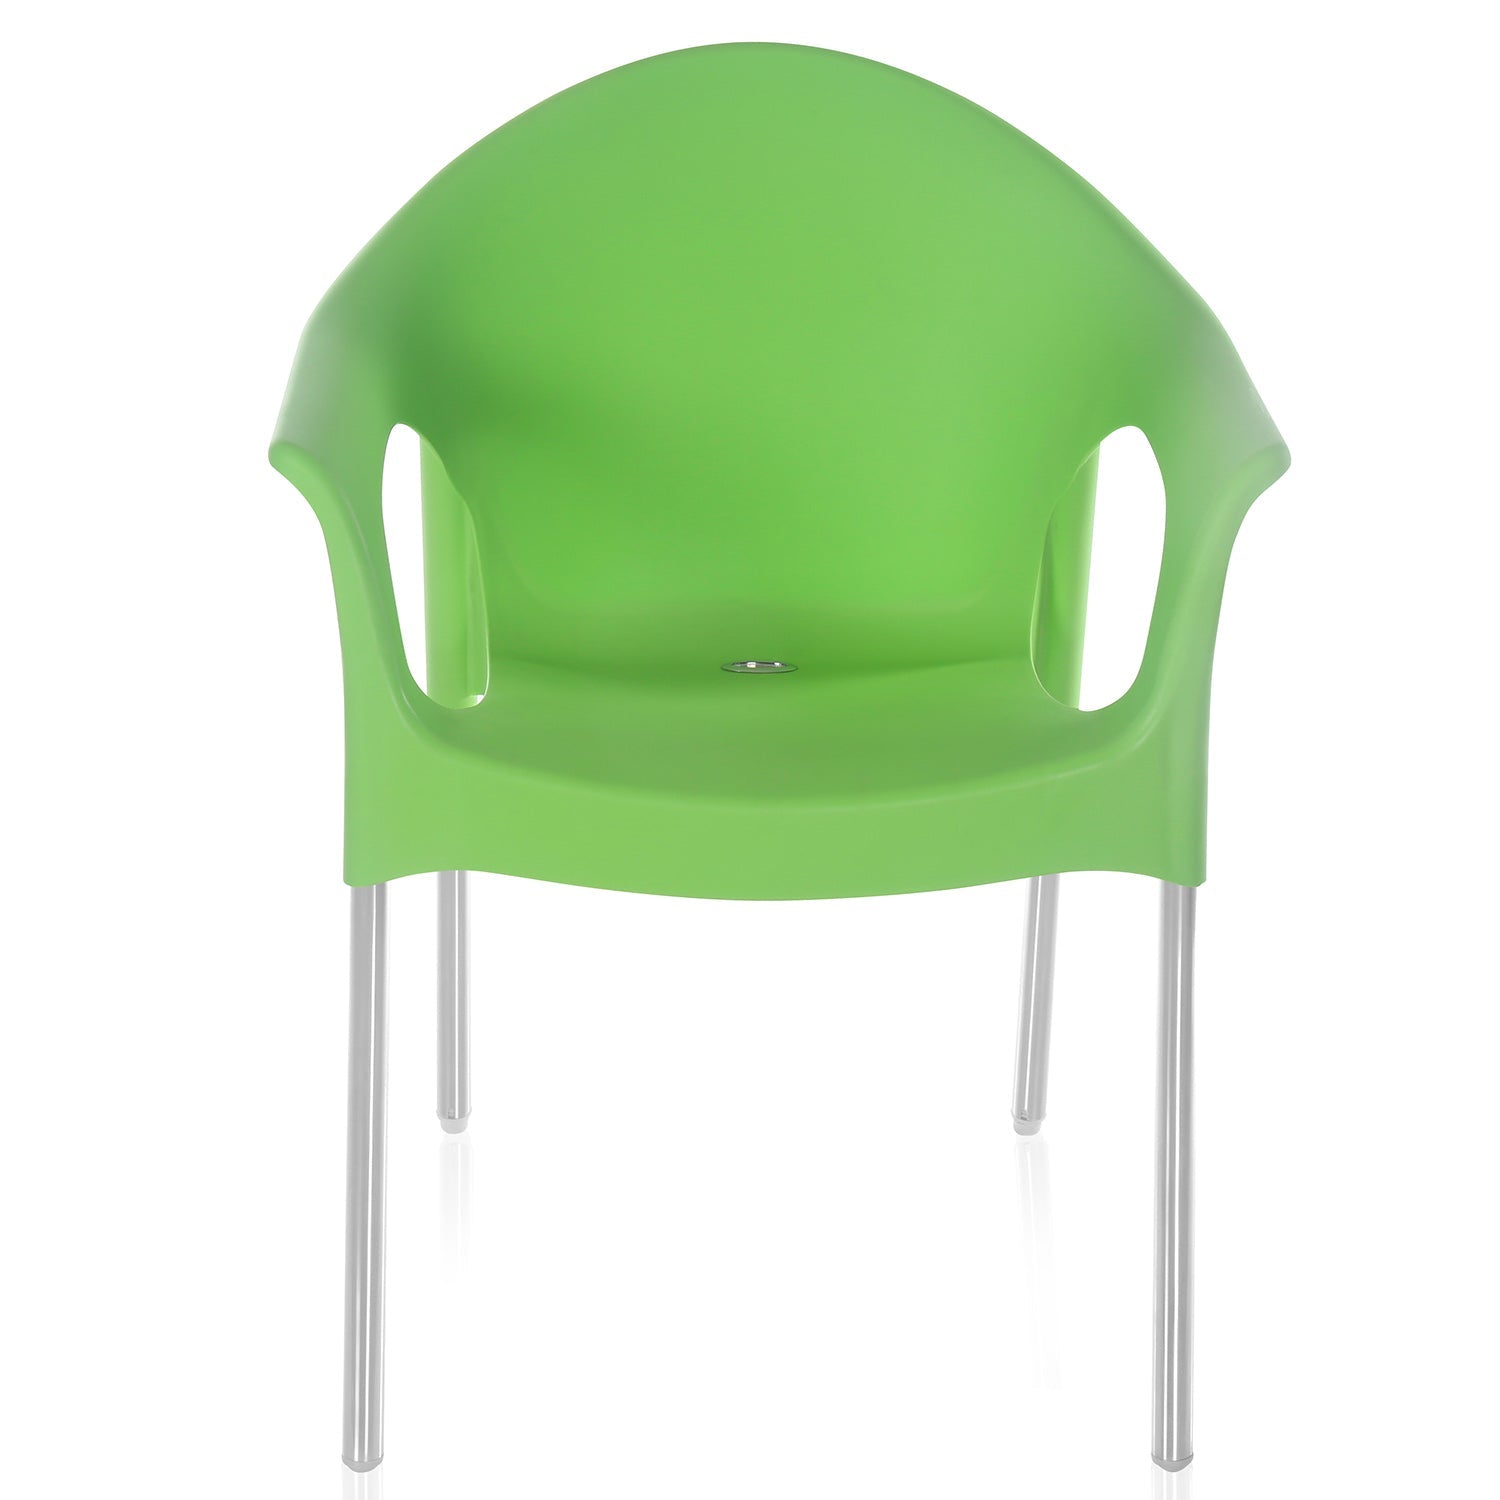 Nilkamal Novella 09 Chair